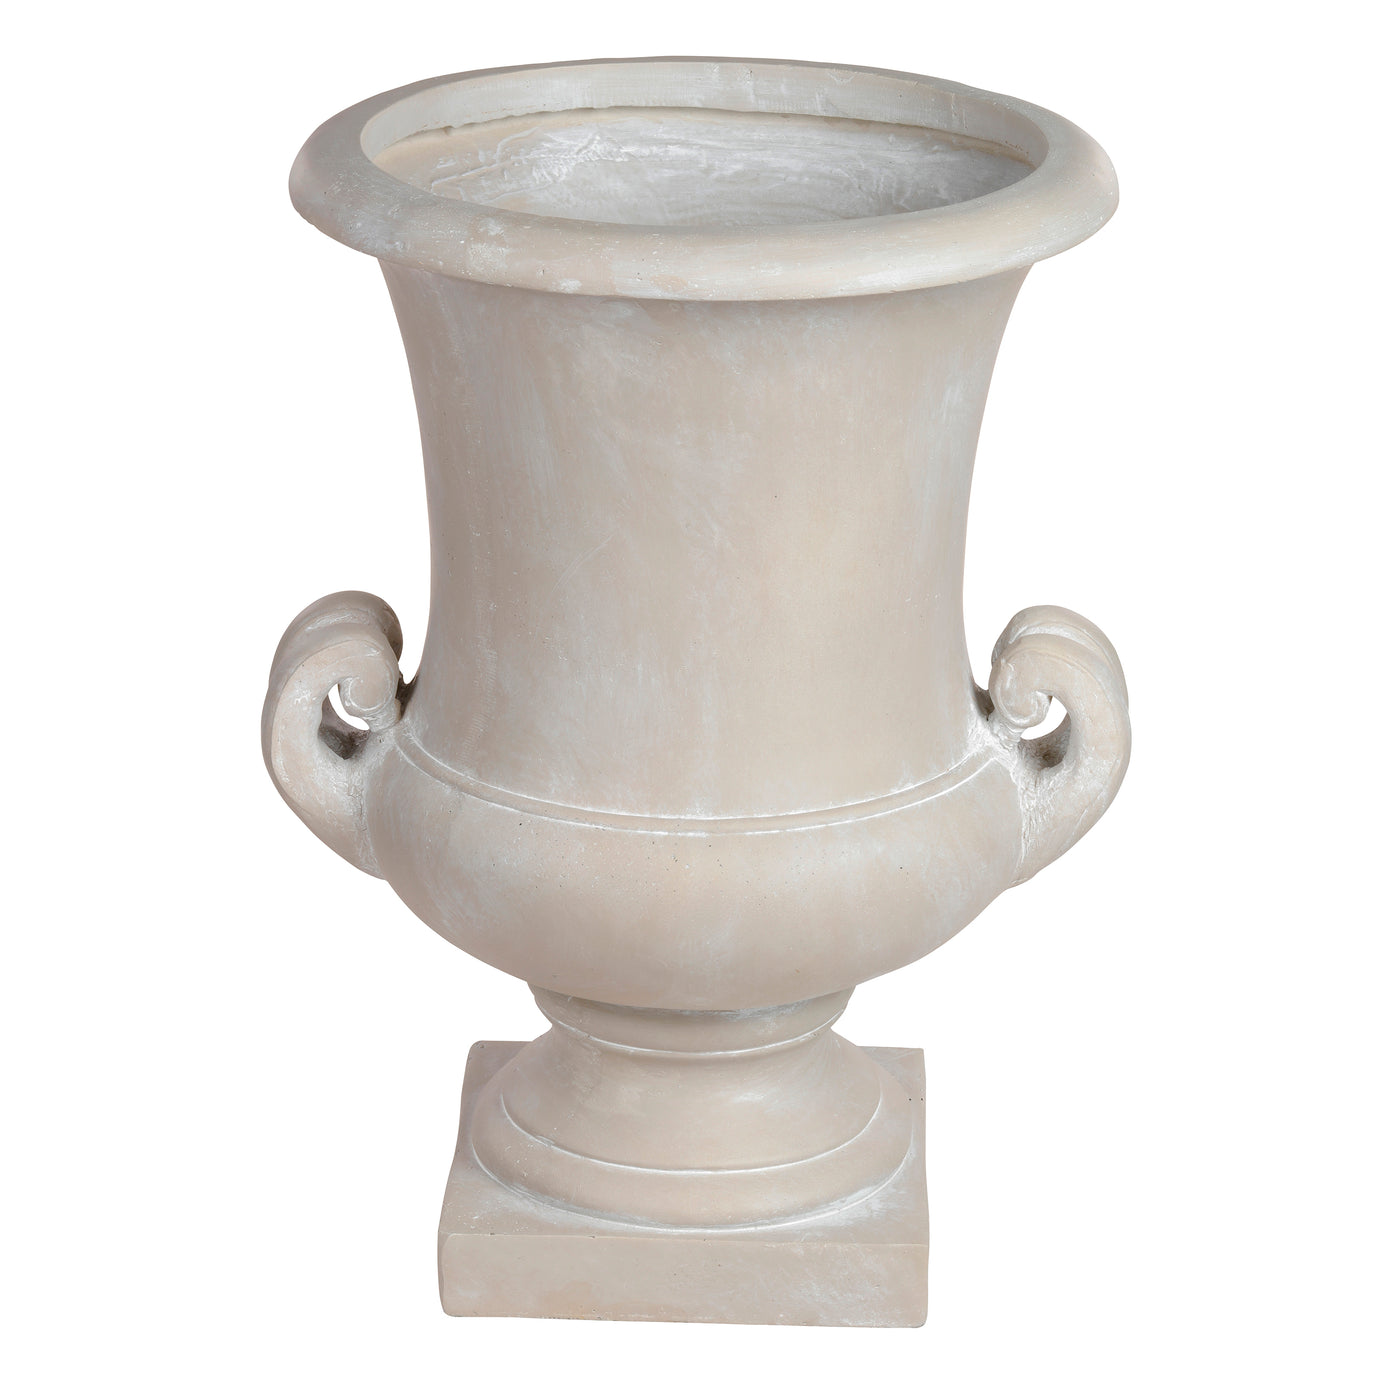 Luxury stonecast urn planter in light grey